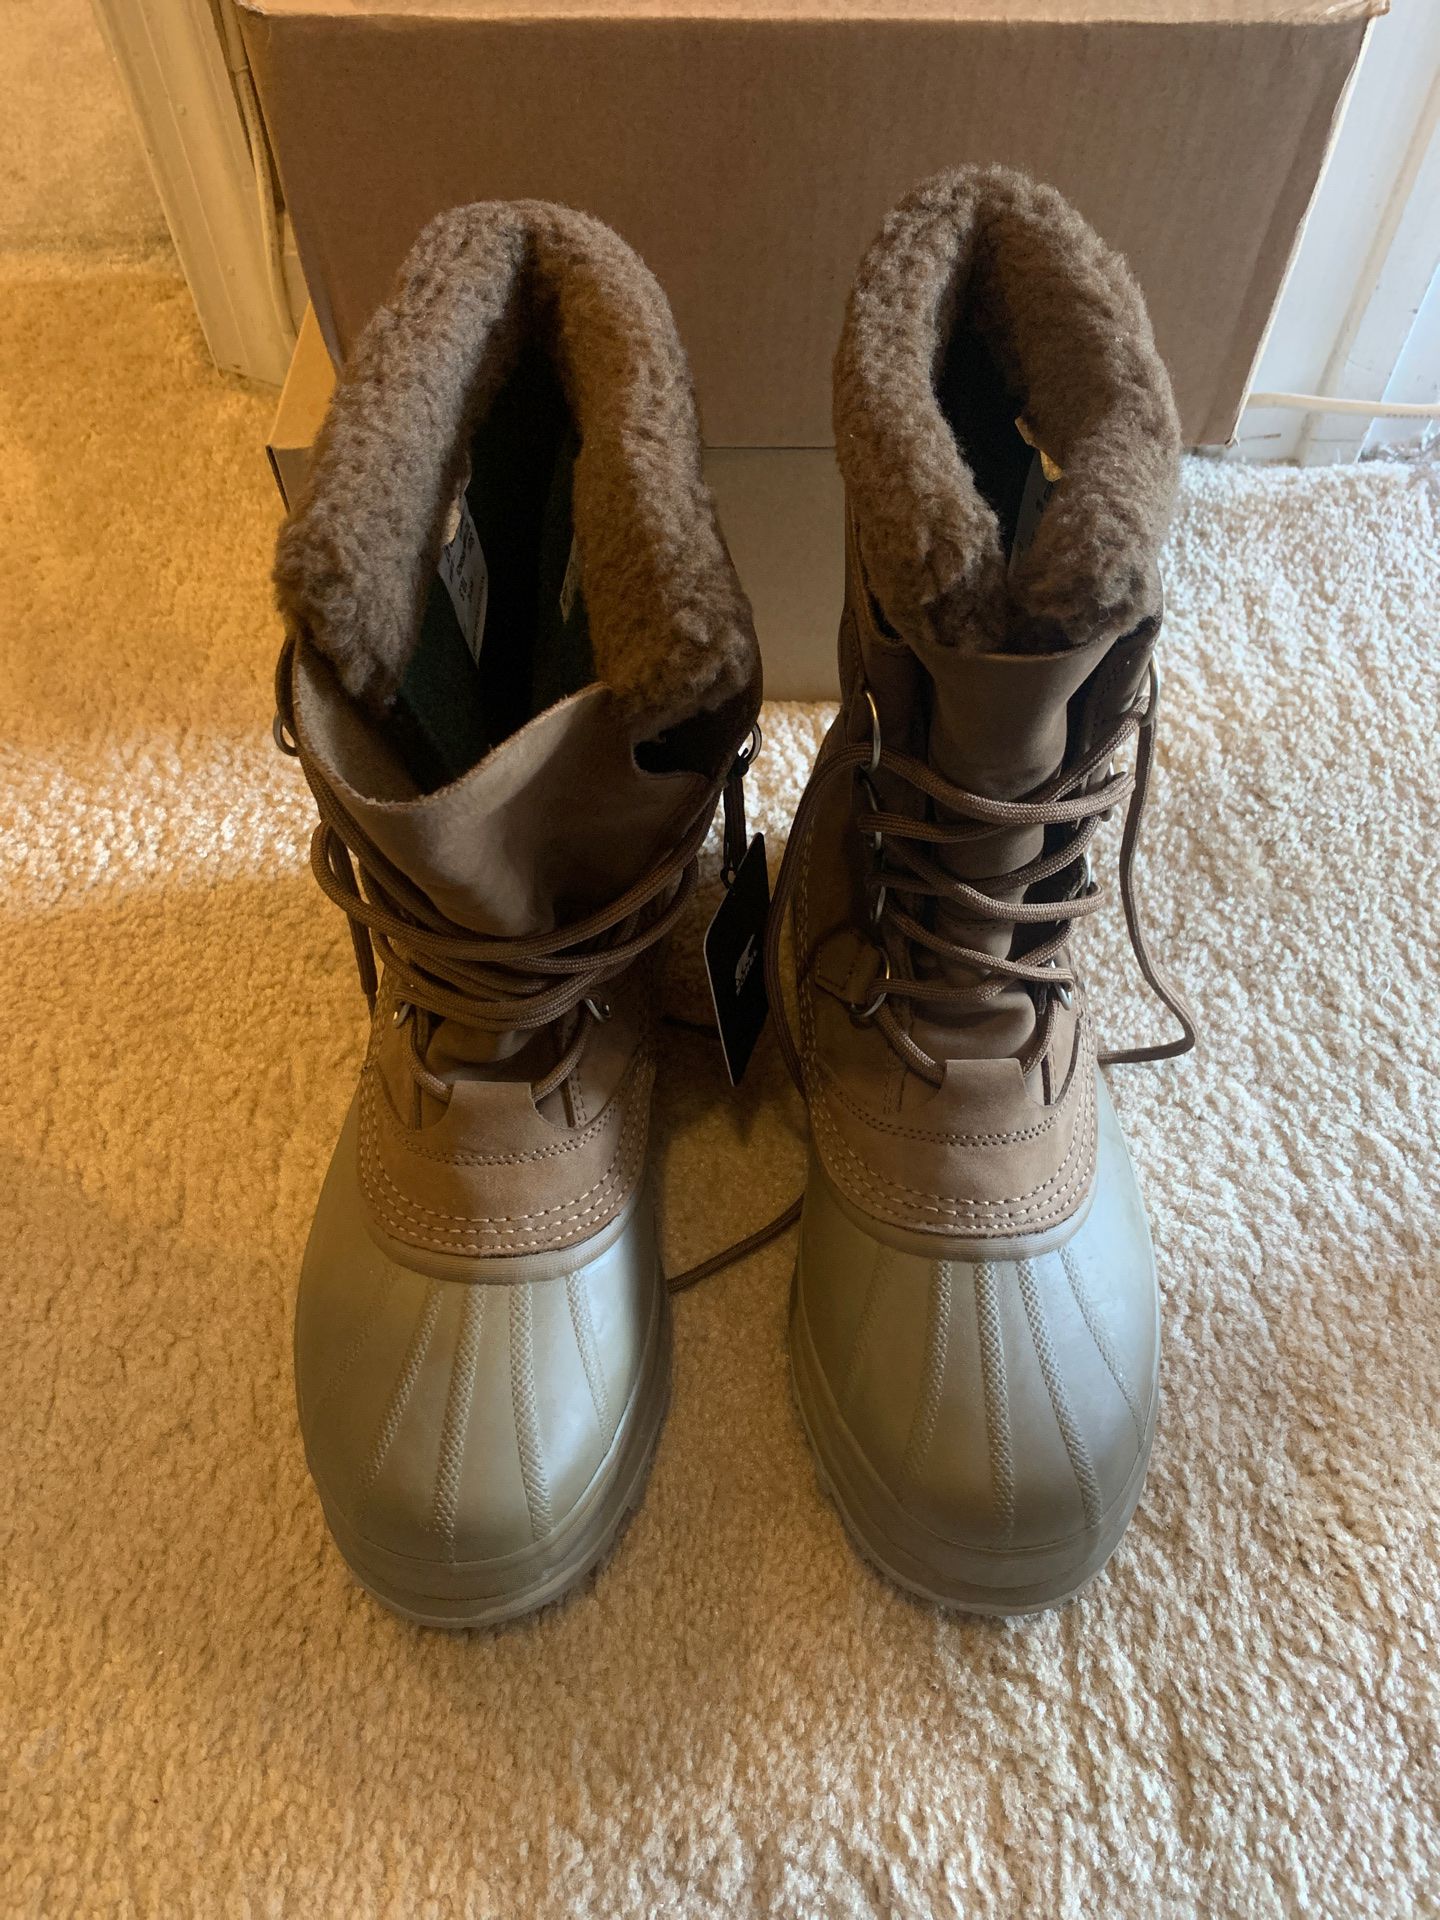 Caribou Sorel waterproof Men’s Boots. Size 10.5 never worn